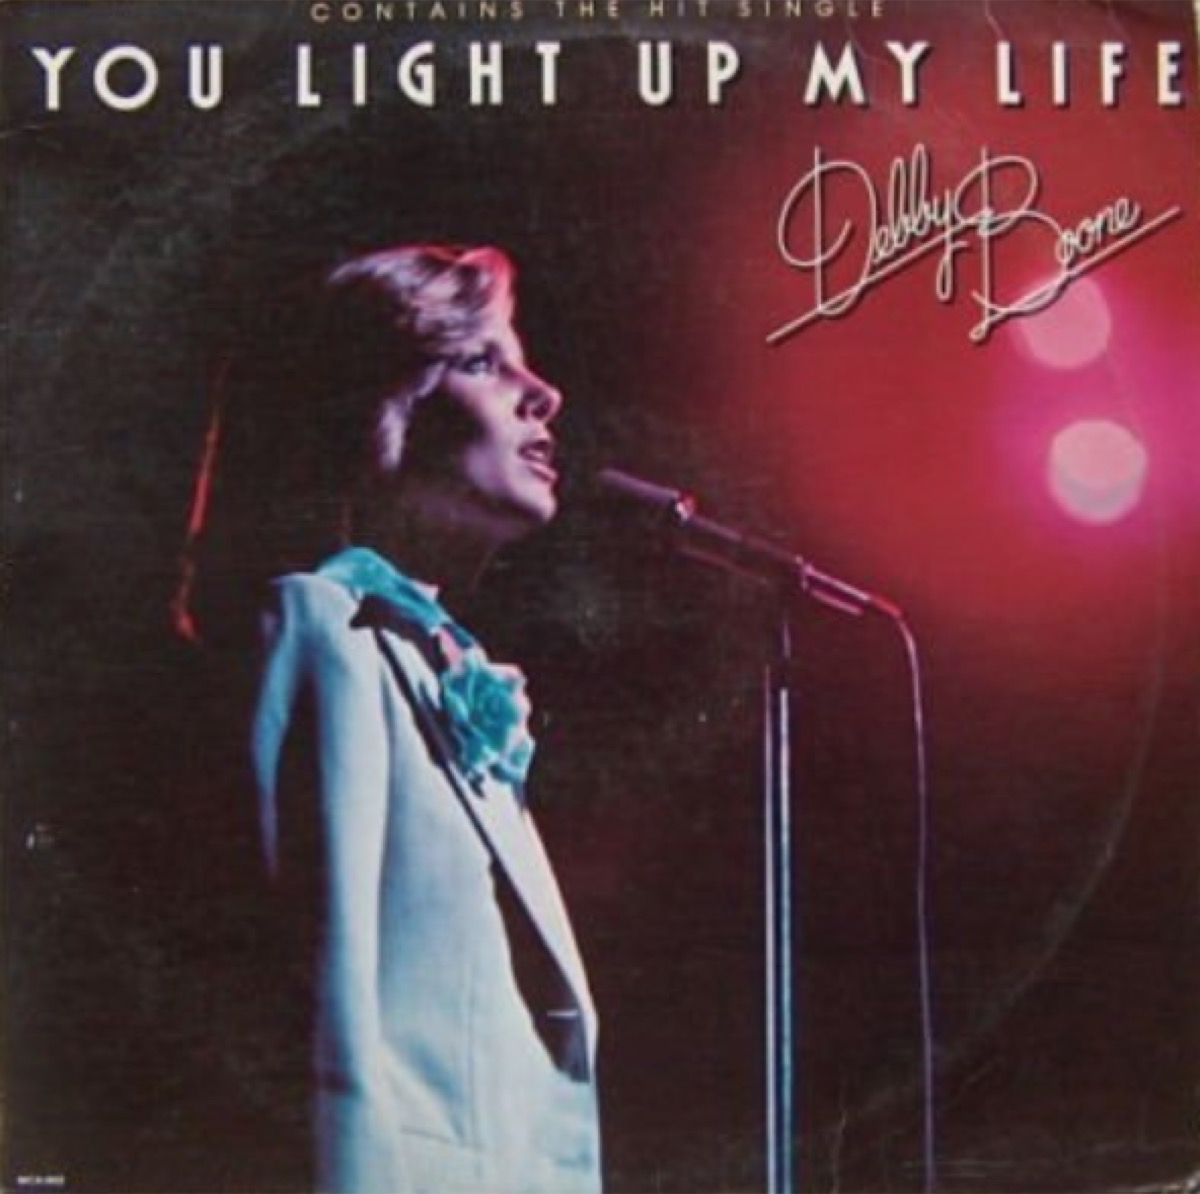 "You Light Up My Life"